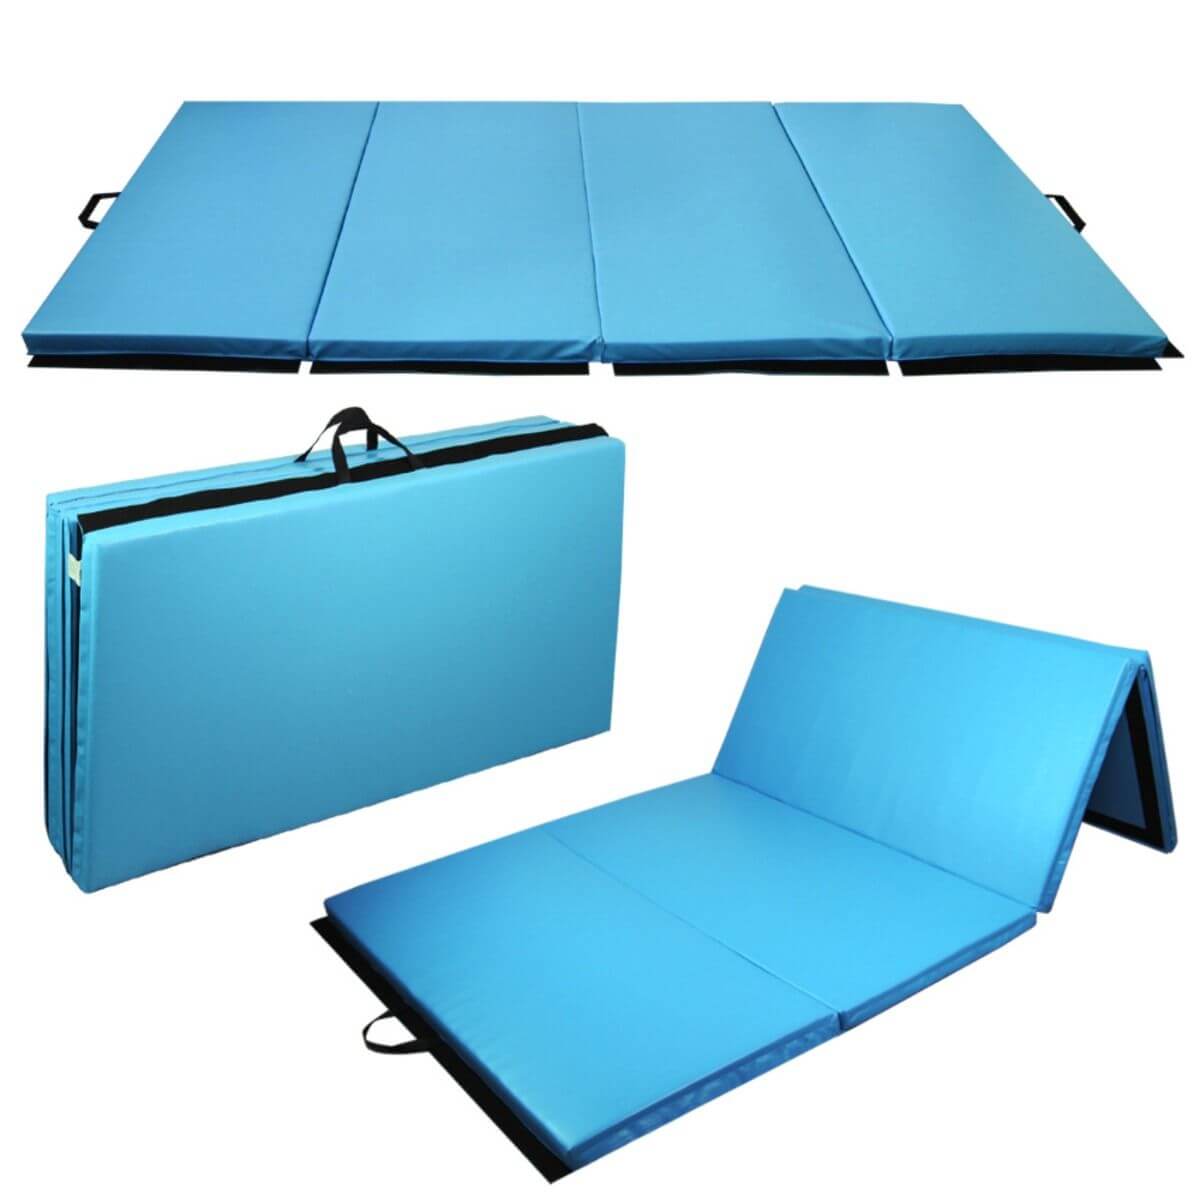 Gymnastic mattress